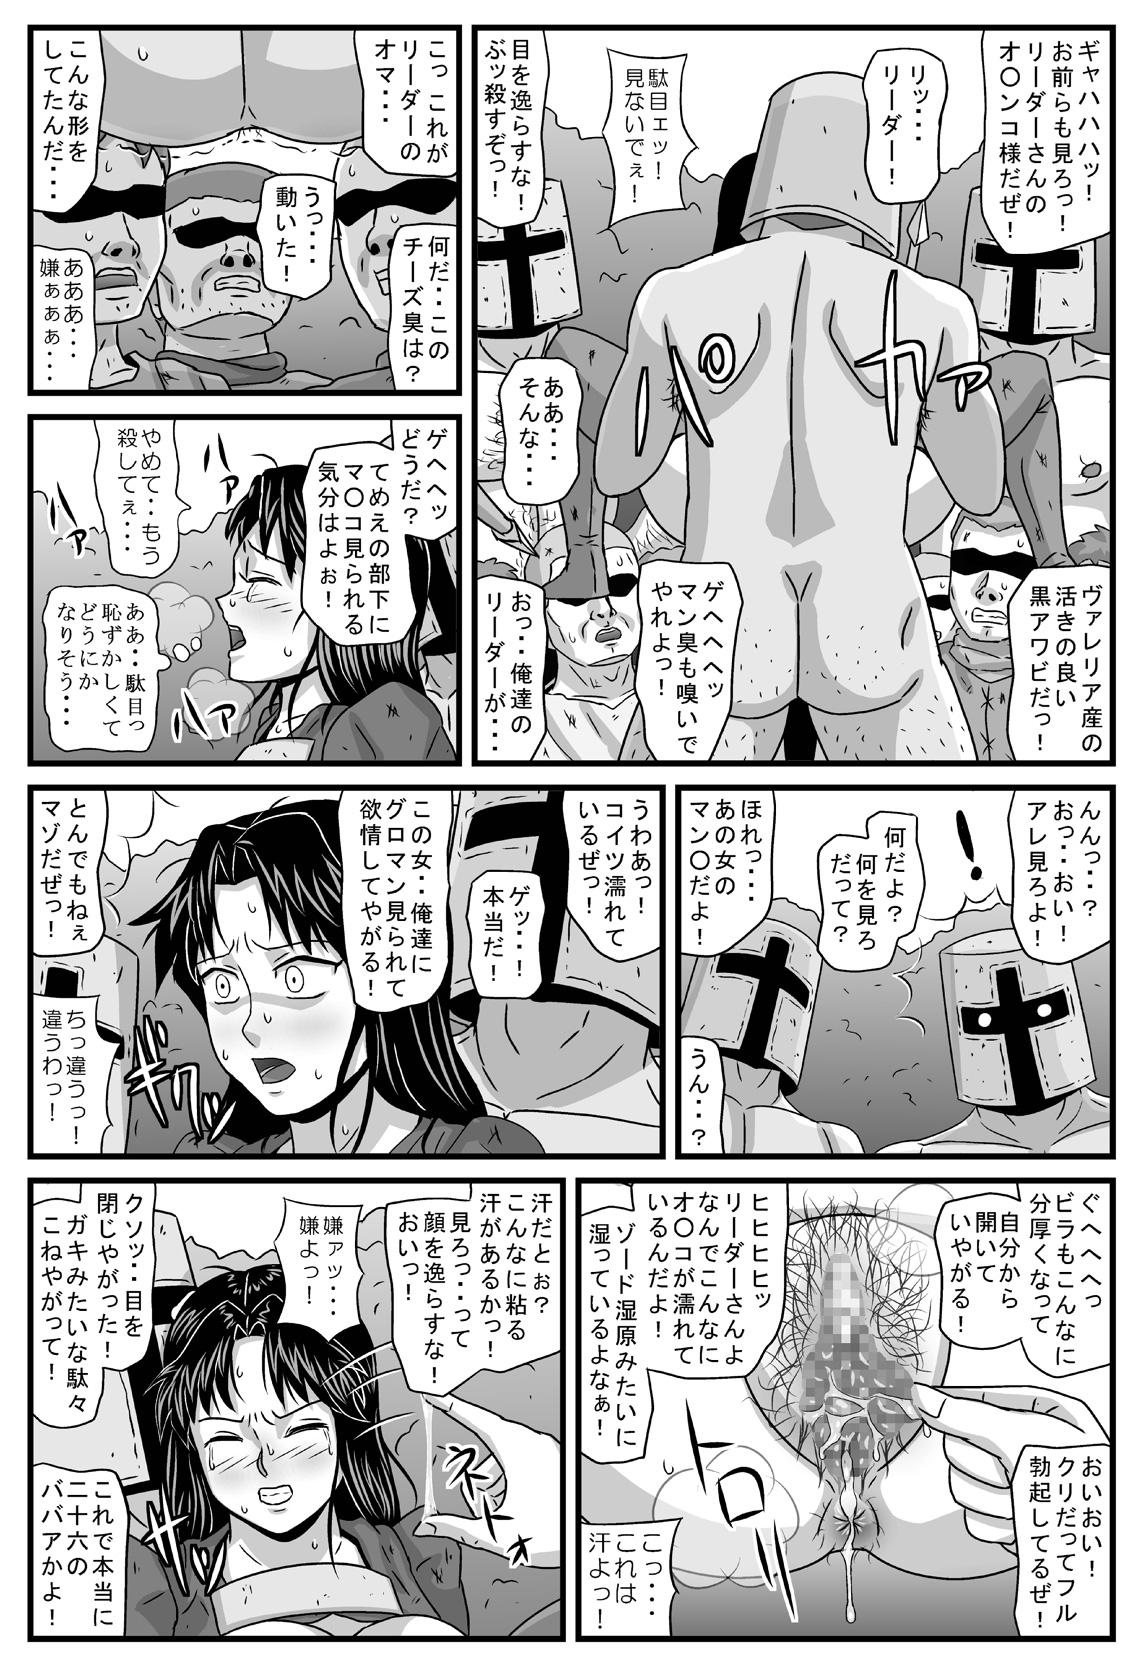 Novia Guerrilla no Onna Leader wa Honoo no 26-sai Kurokami Shojo - Tactics ogre Facial - Page 8